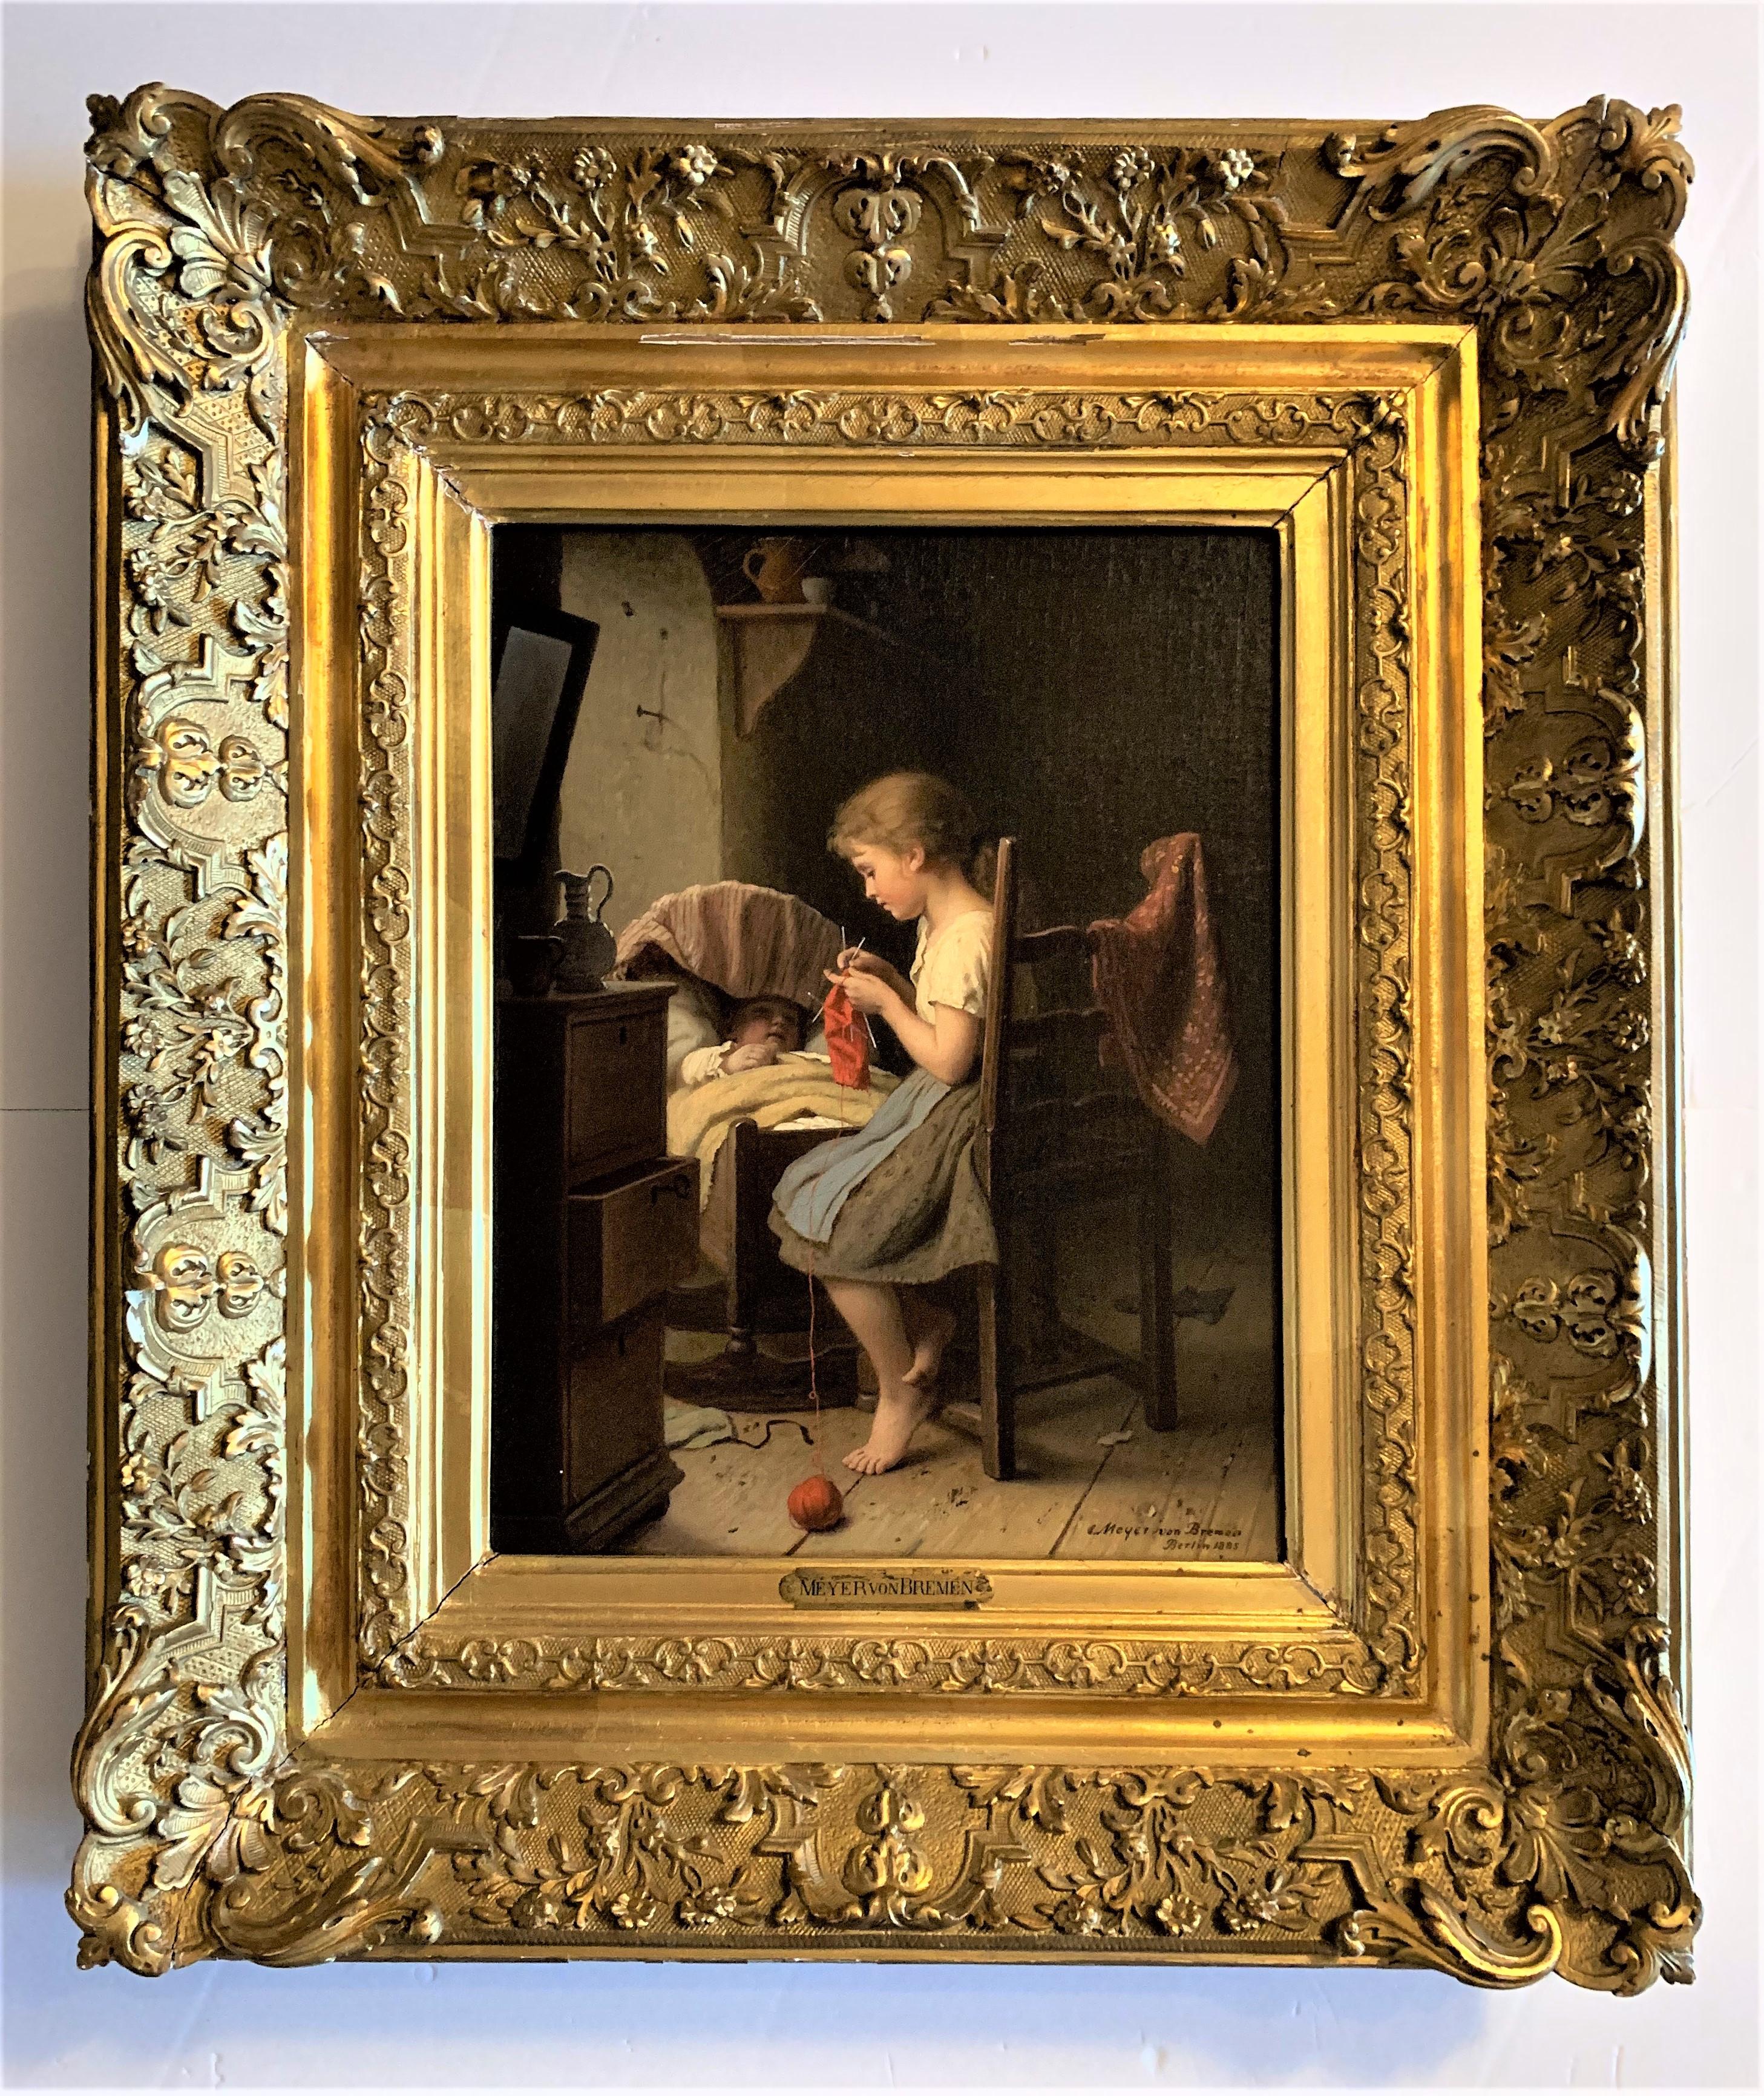 Johann Georg Meyer von Bremen Portrait Painting - Sister Knitting with Child, German Academic Realism